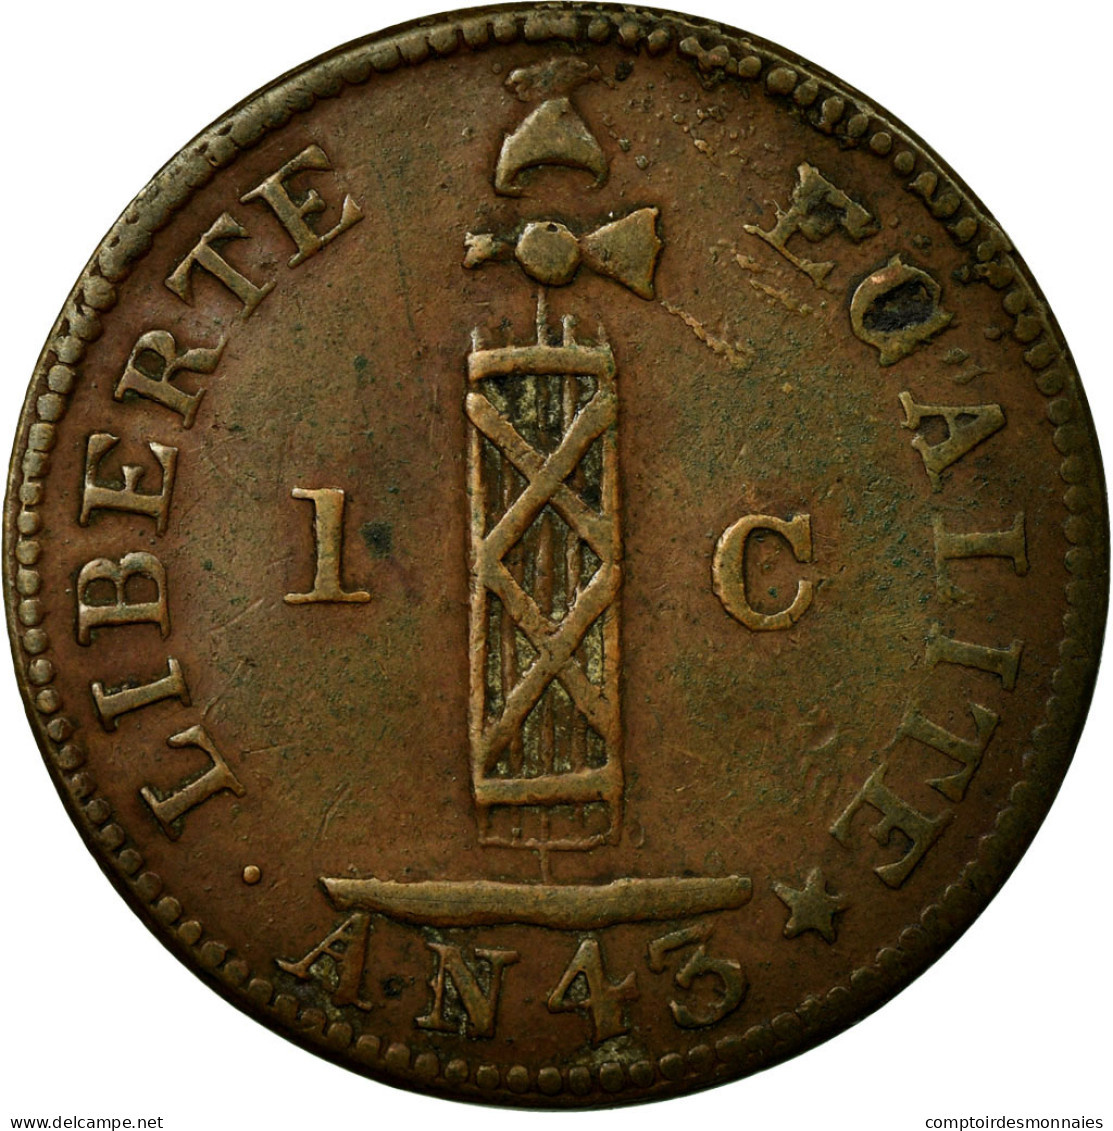 Monnaie, Haïti, Centime, 1846, TTB, Cuivre, KM:24 - Haiti